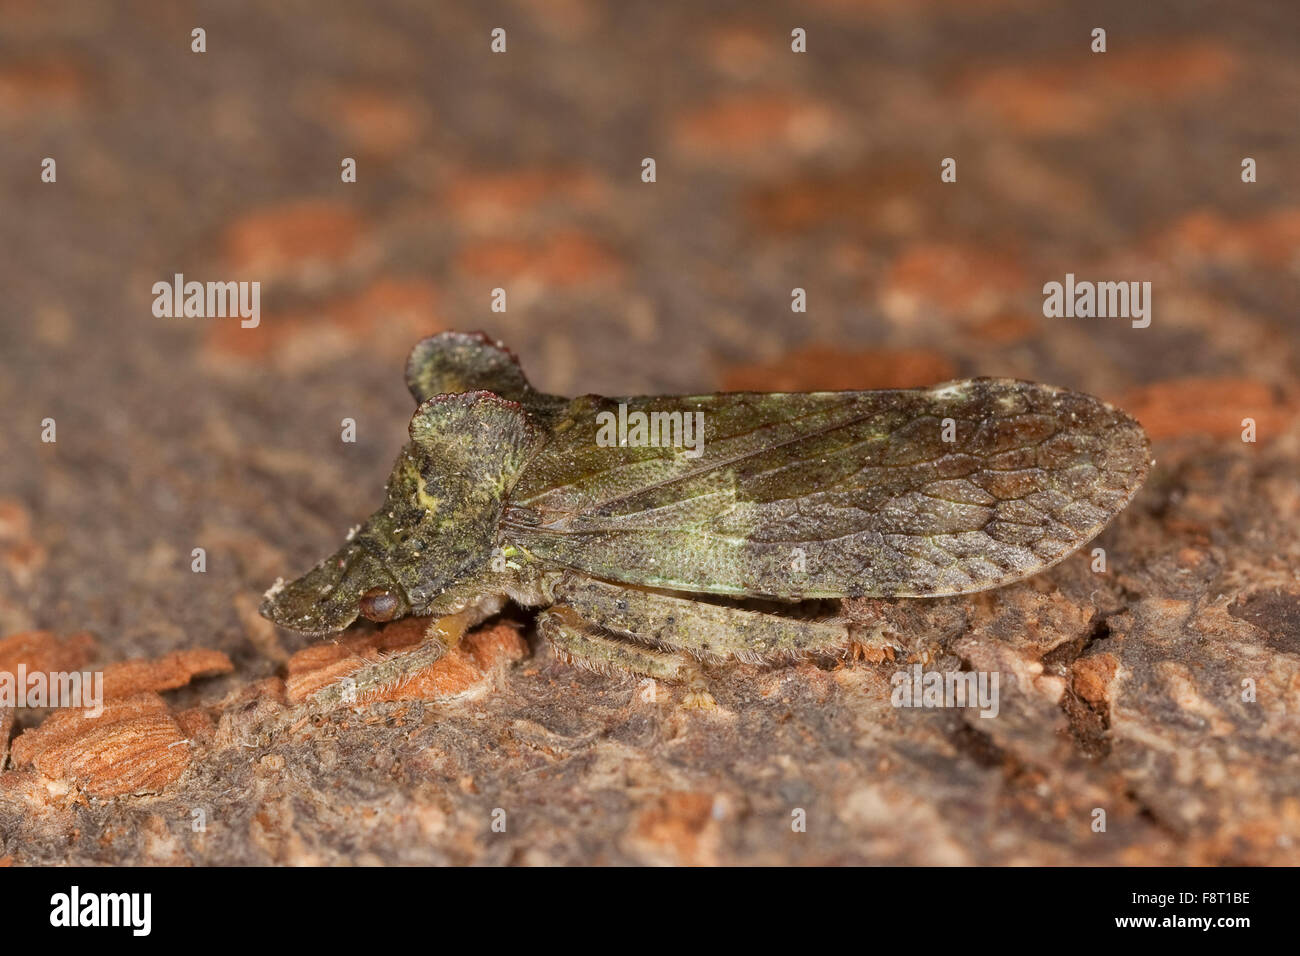 Ear cicada, Echte Ohrenzikade, Ohrzikade, Ohren-Zikade, Ohr-Zikade, Ohrzirpe, Ohrenzirpe, Ledra aurita, le grand diable Stock Photo